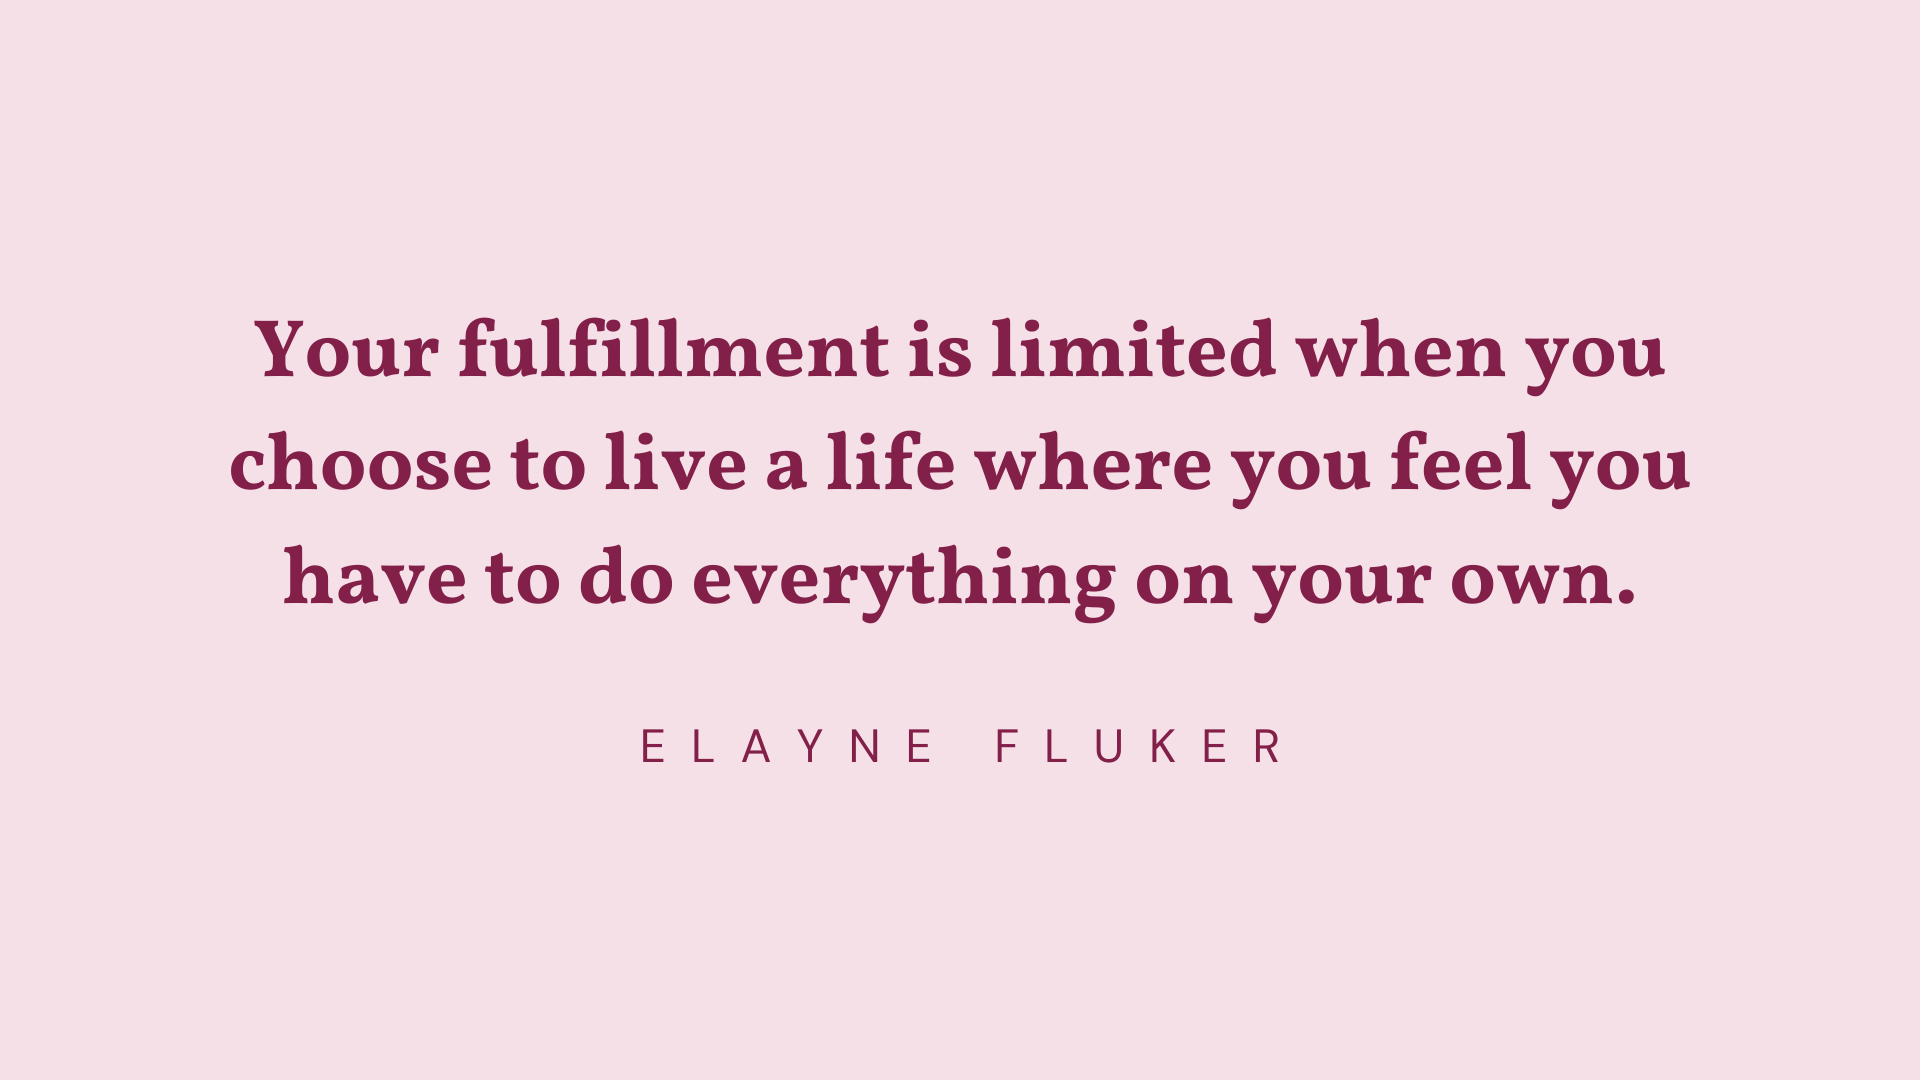 elayne fluker quote from Get Over I Got It